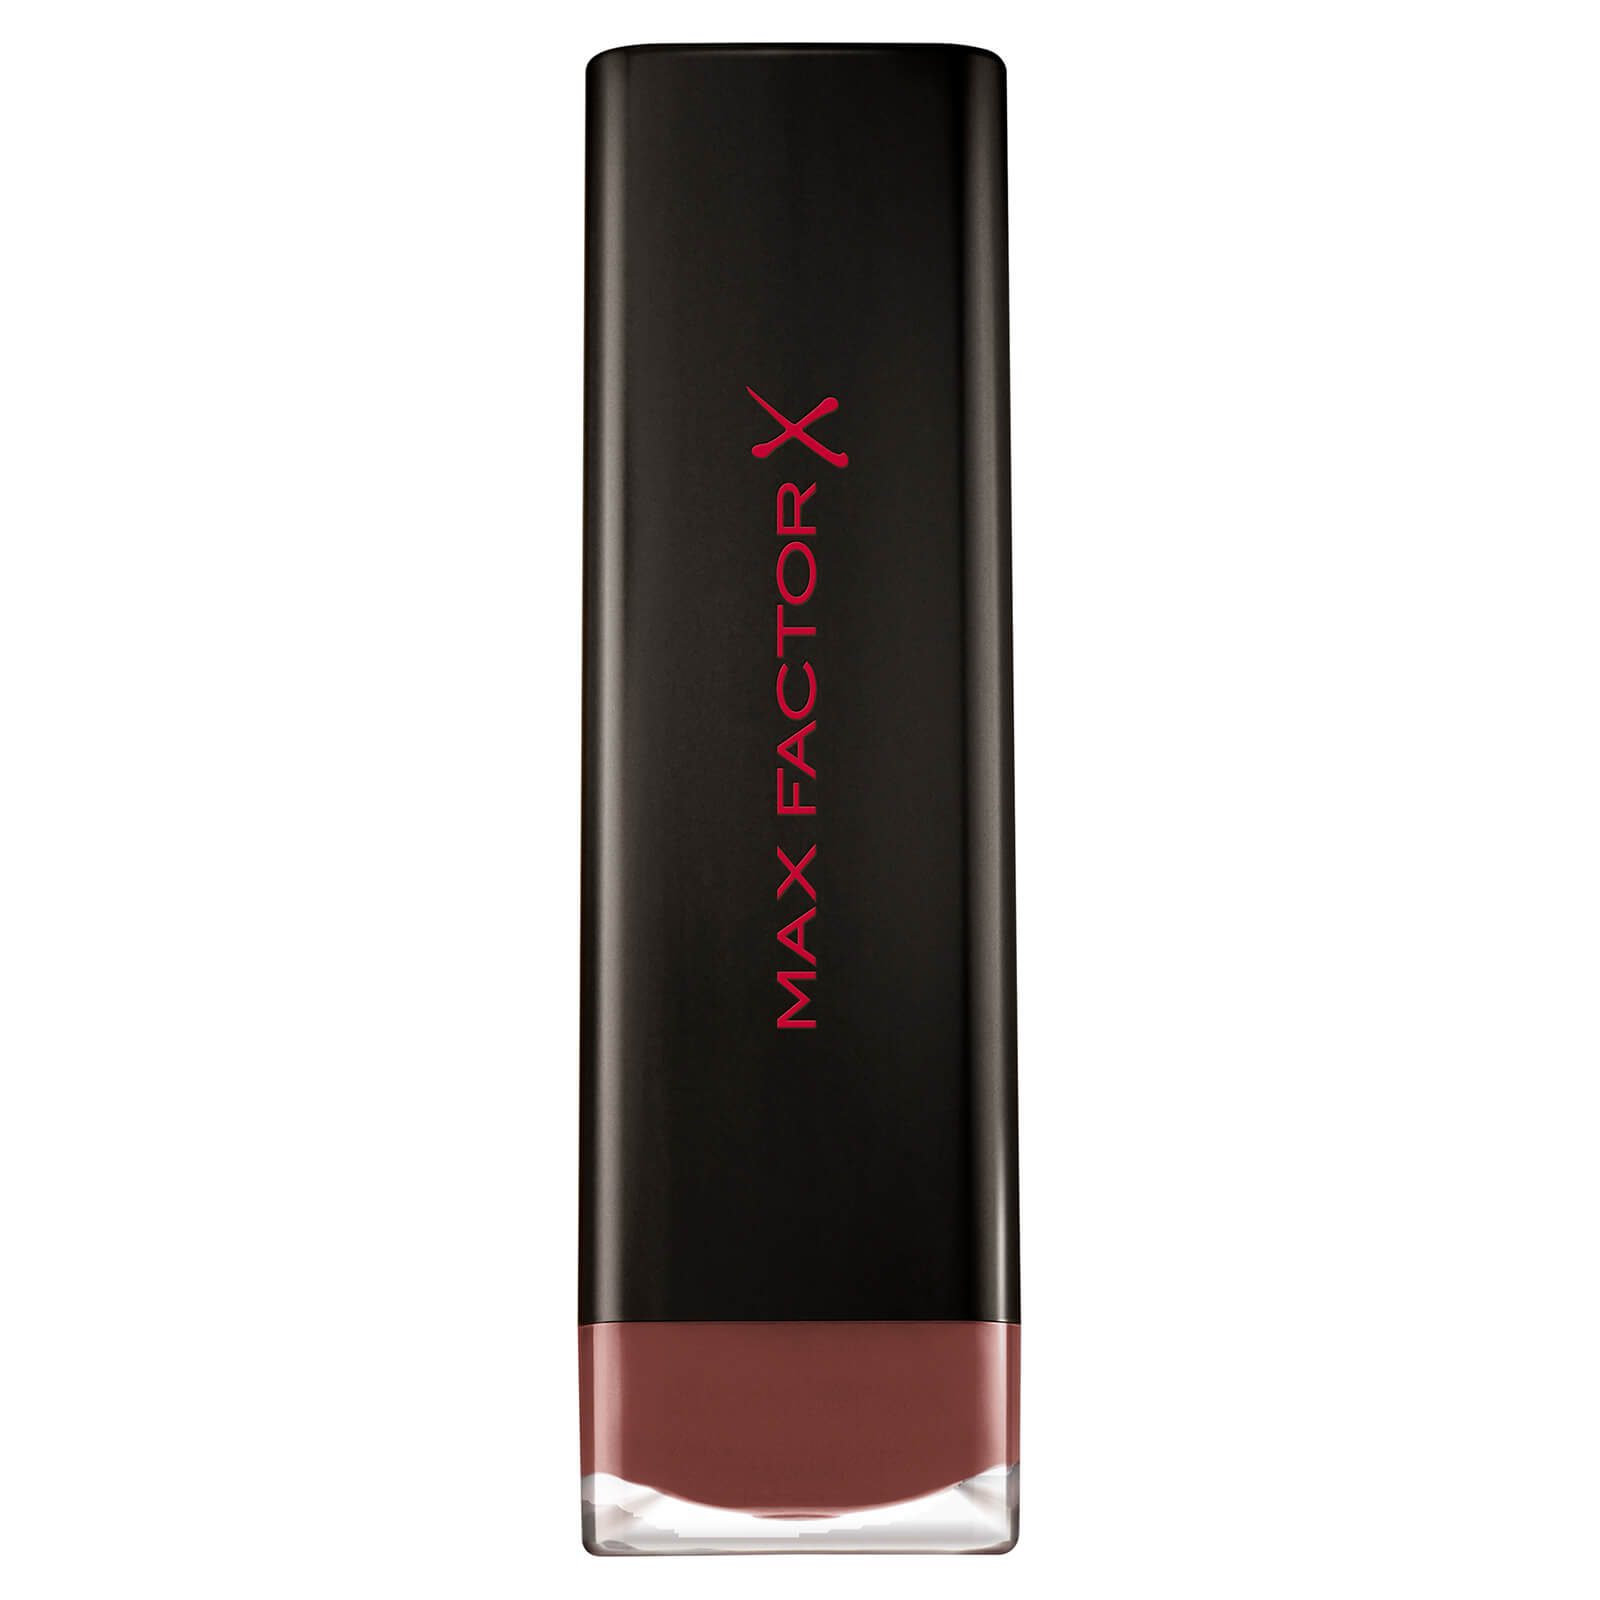 Max Factor Colour Elixir Velvet Matte Lipstick with Oils and Butters 3.5g (Various Shades) - 040 Dusk